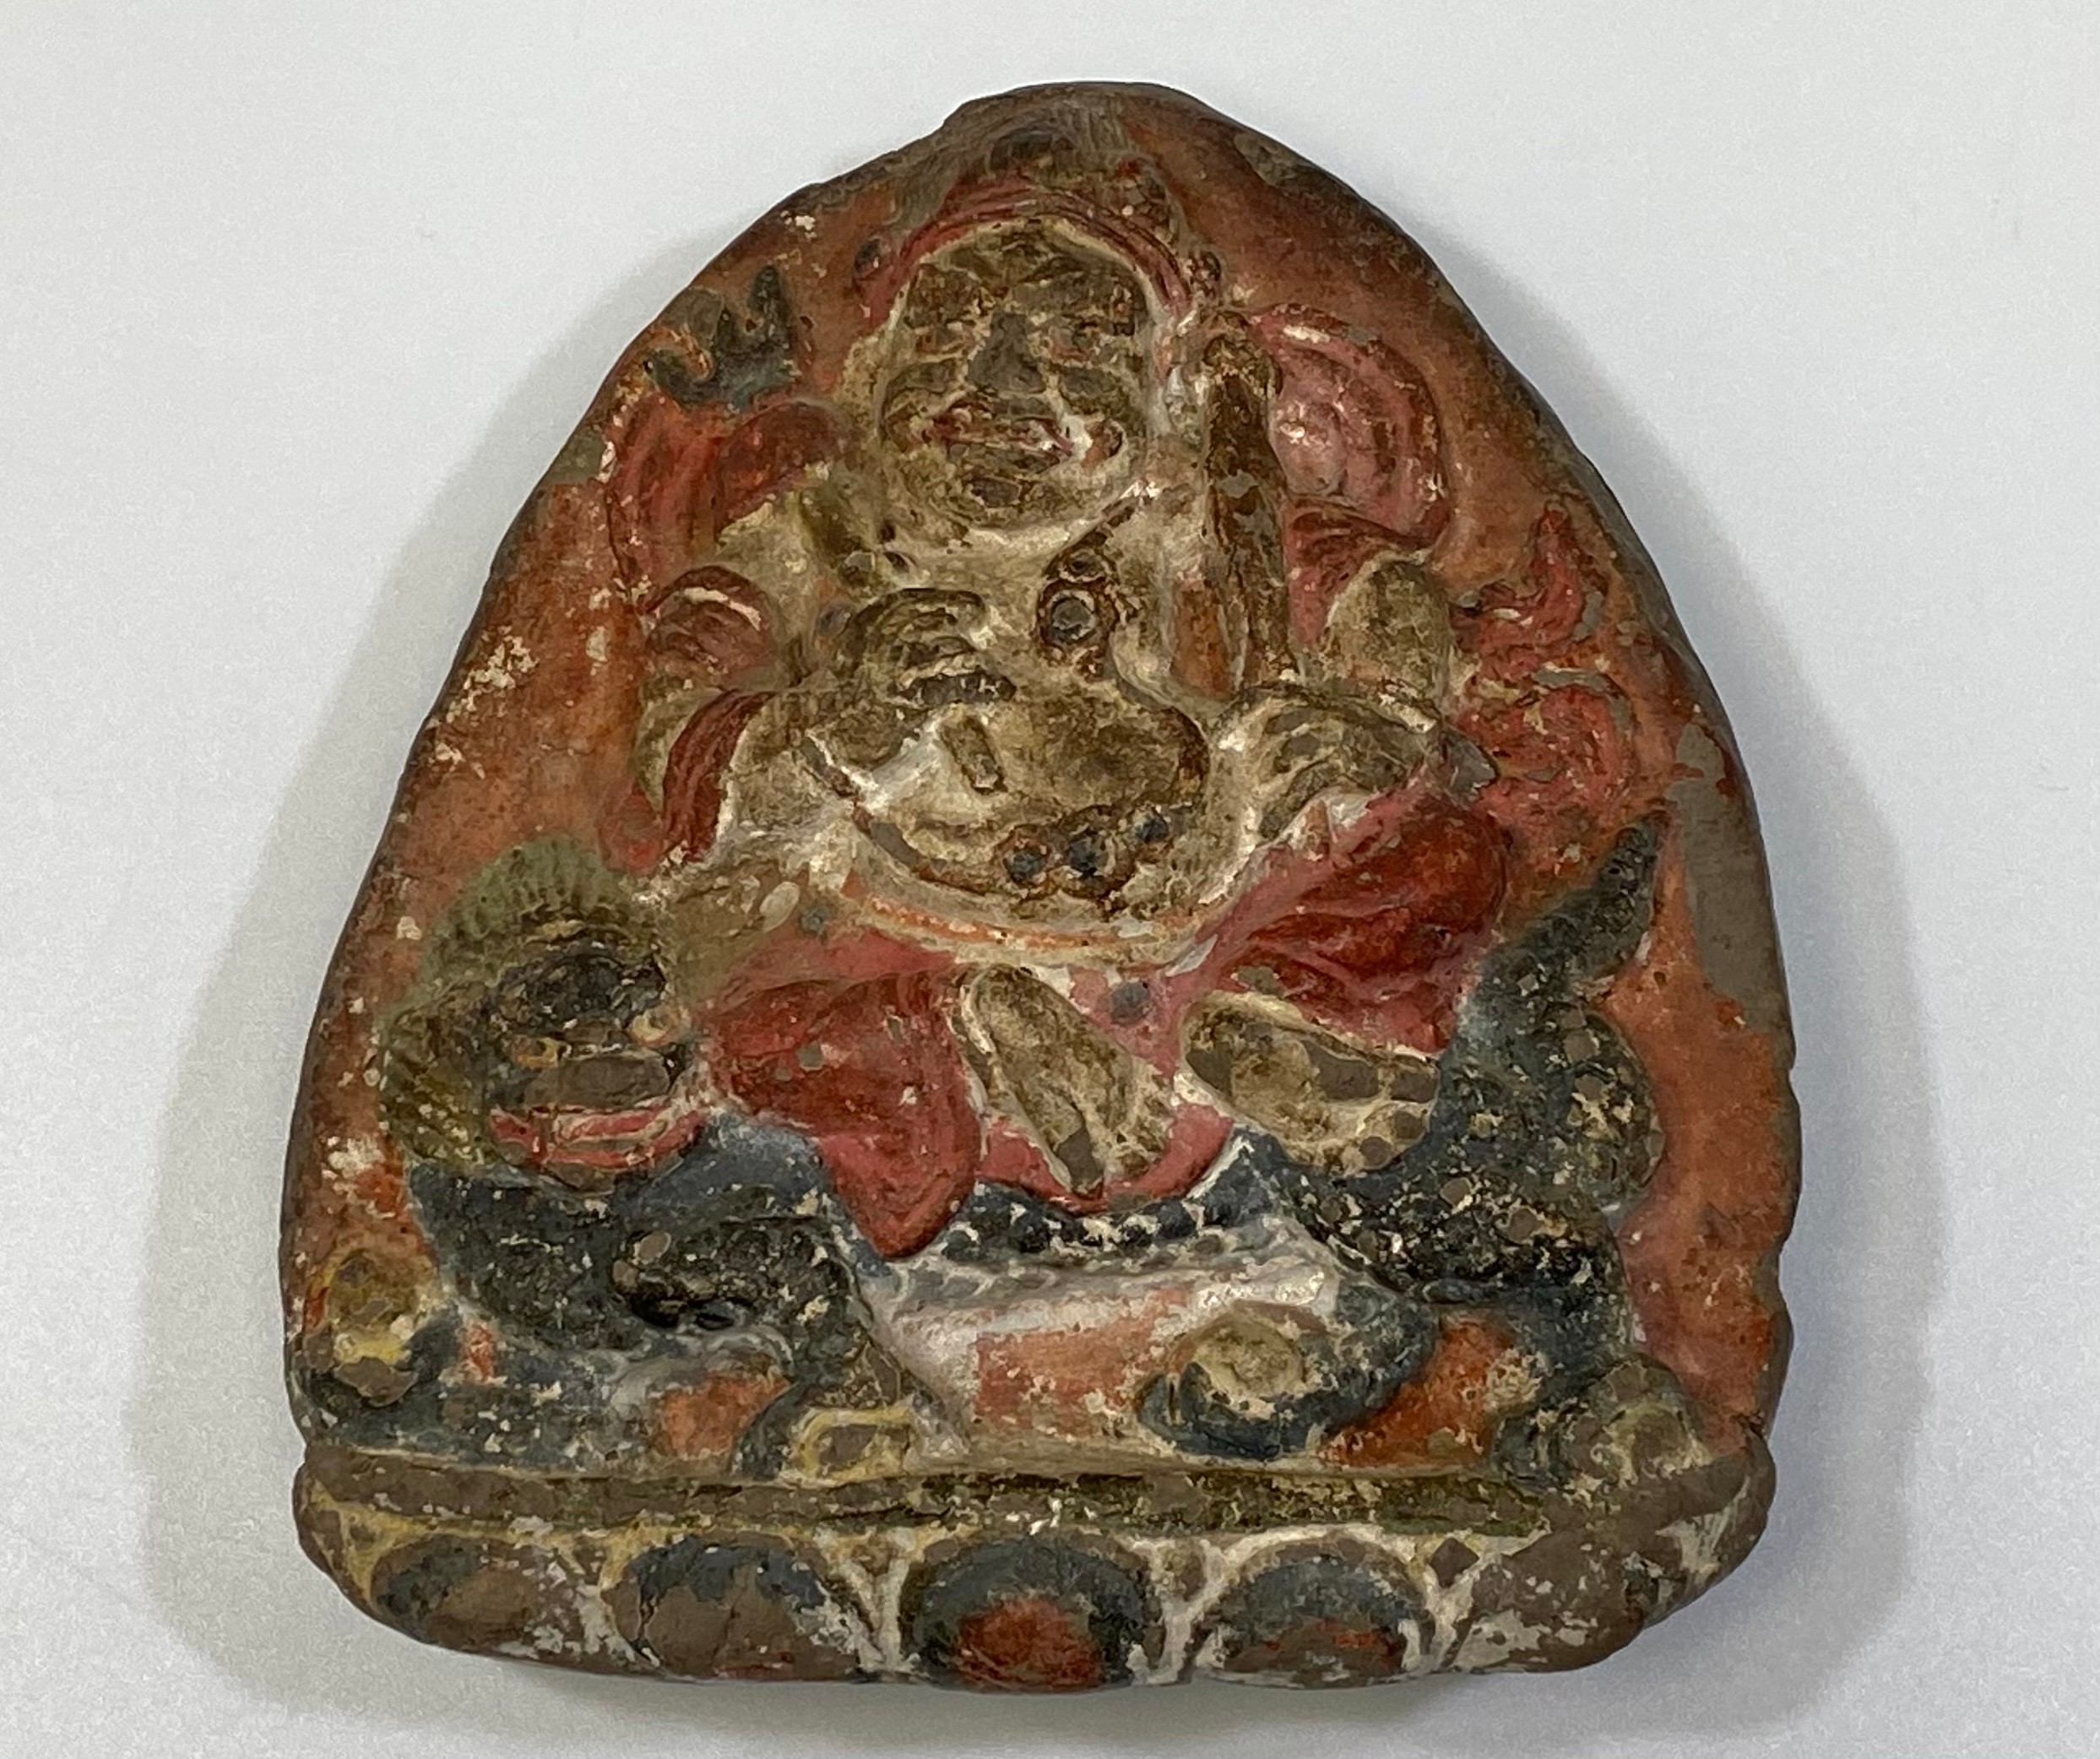 A 19th century Tibetan clay amulet painted with a Buddhist deity, possibly Vaishravana, riding a foo